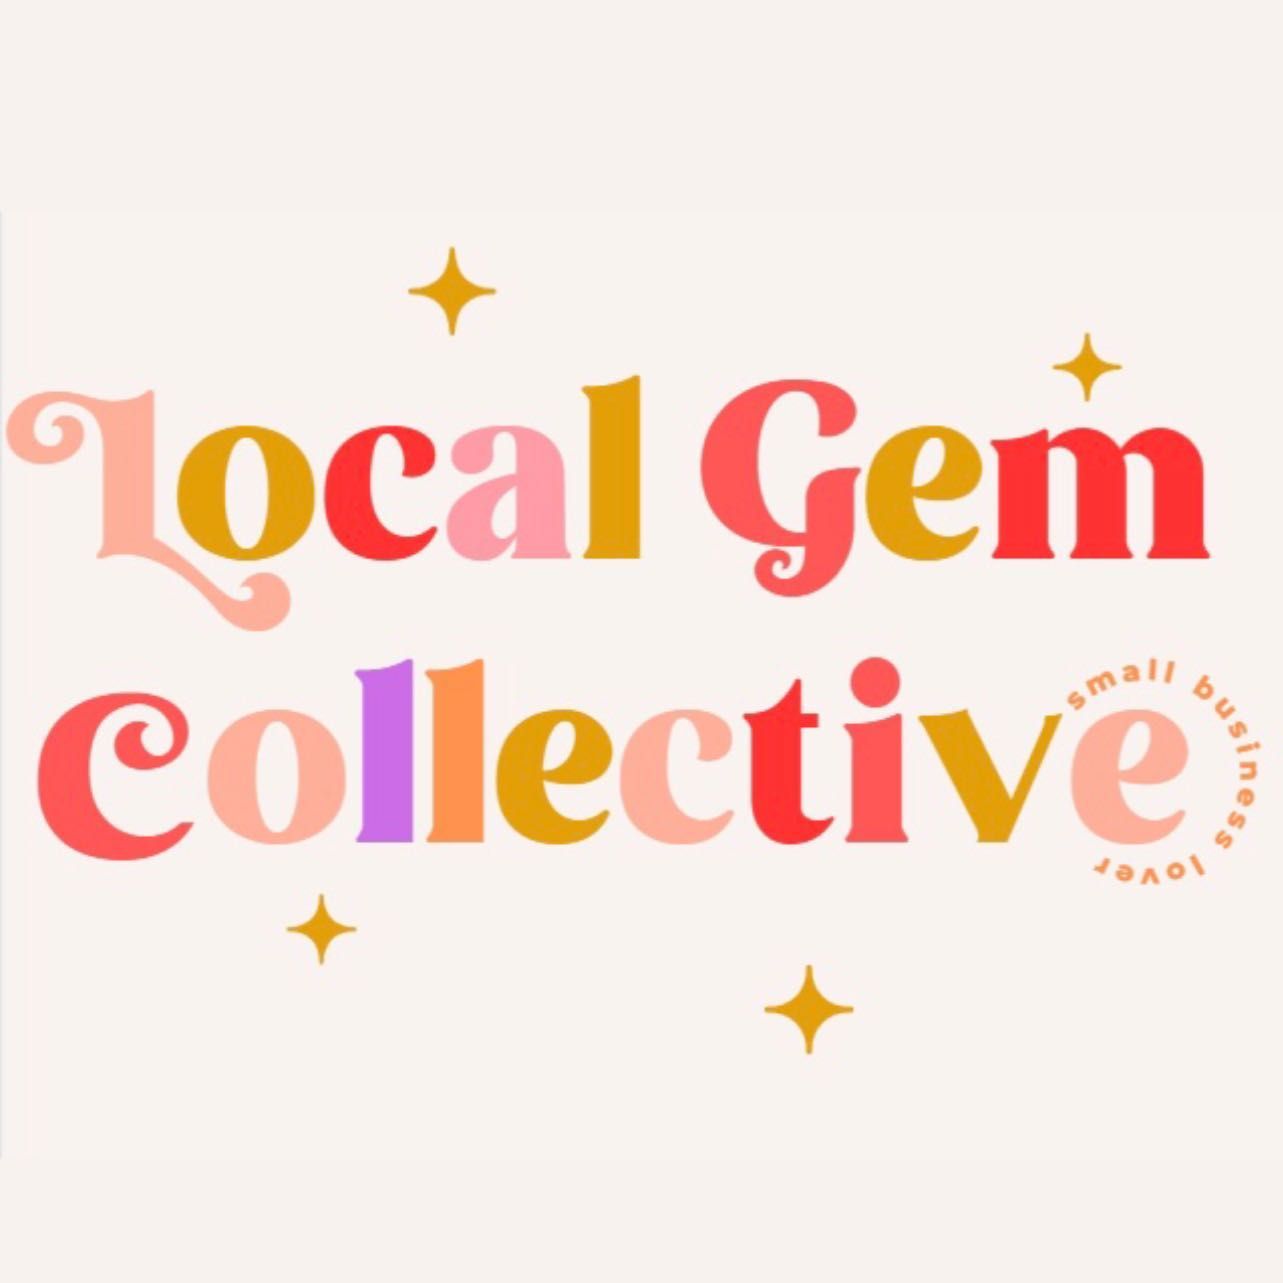 Local Gem Collective, 940 W Chapman Ave, 202, Orange, 92868